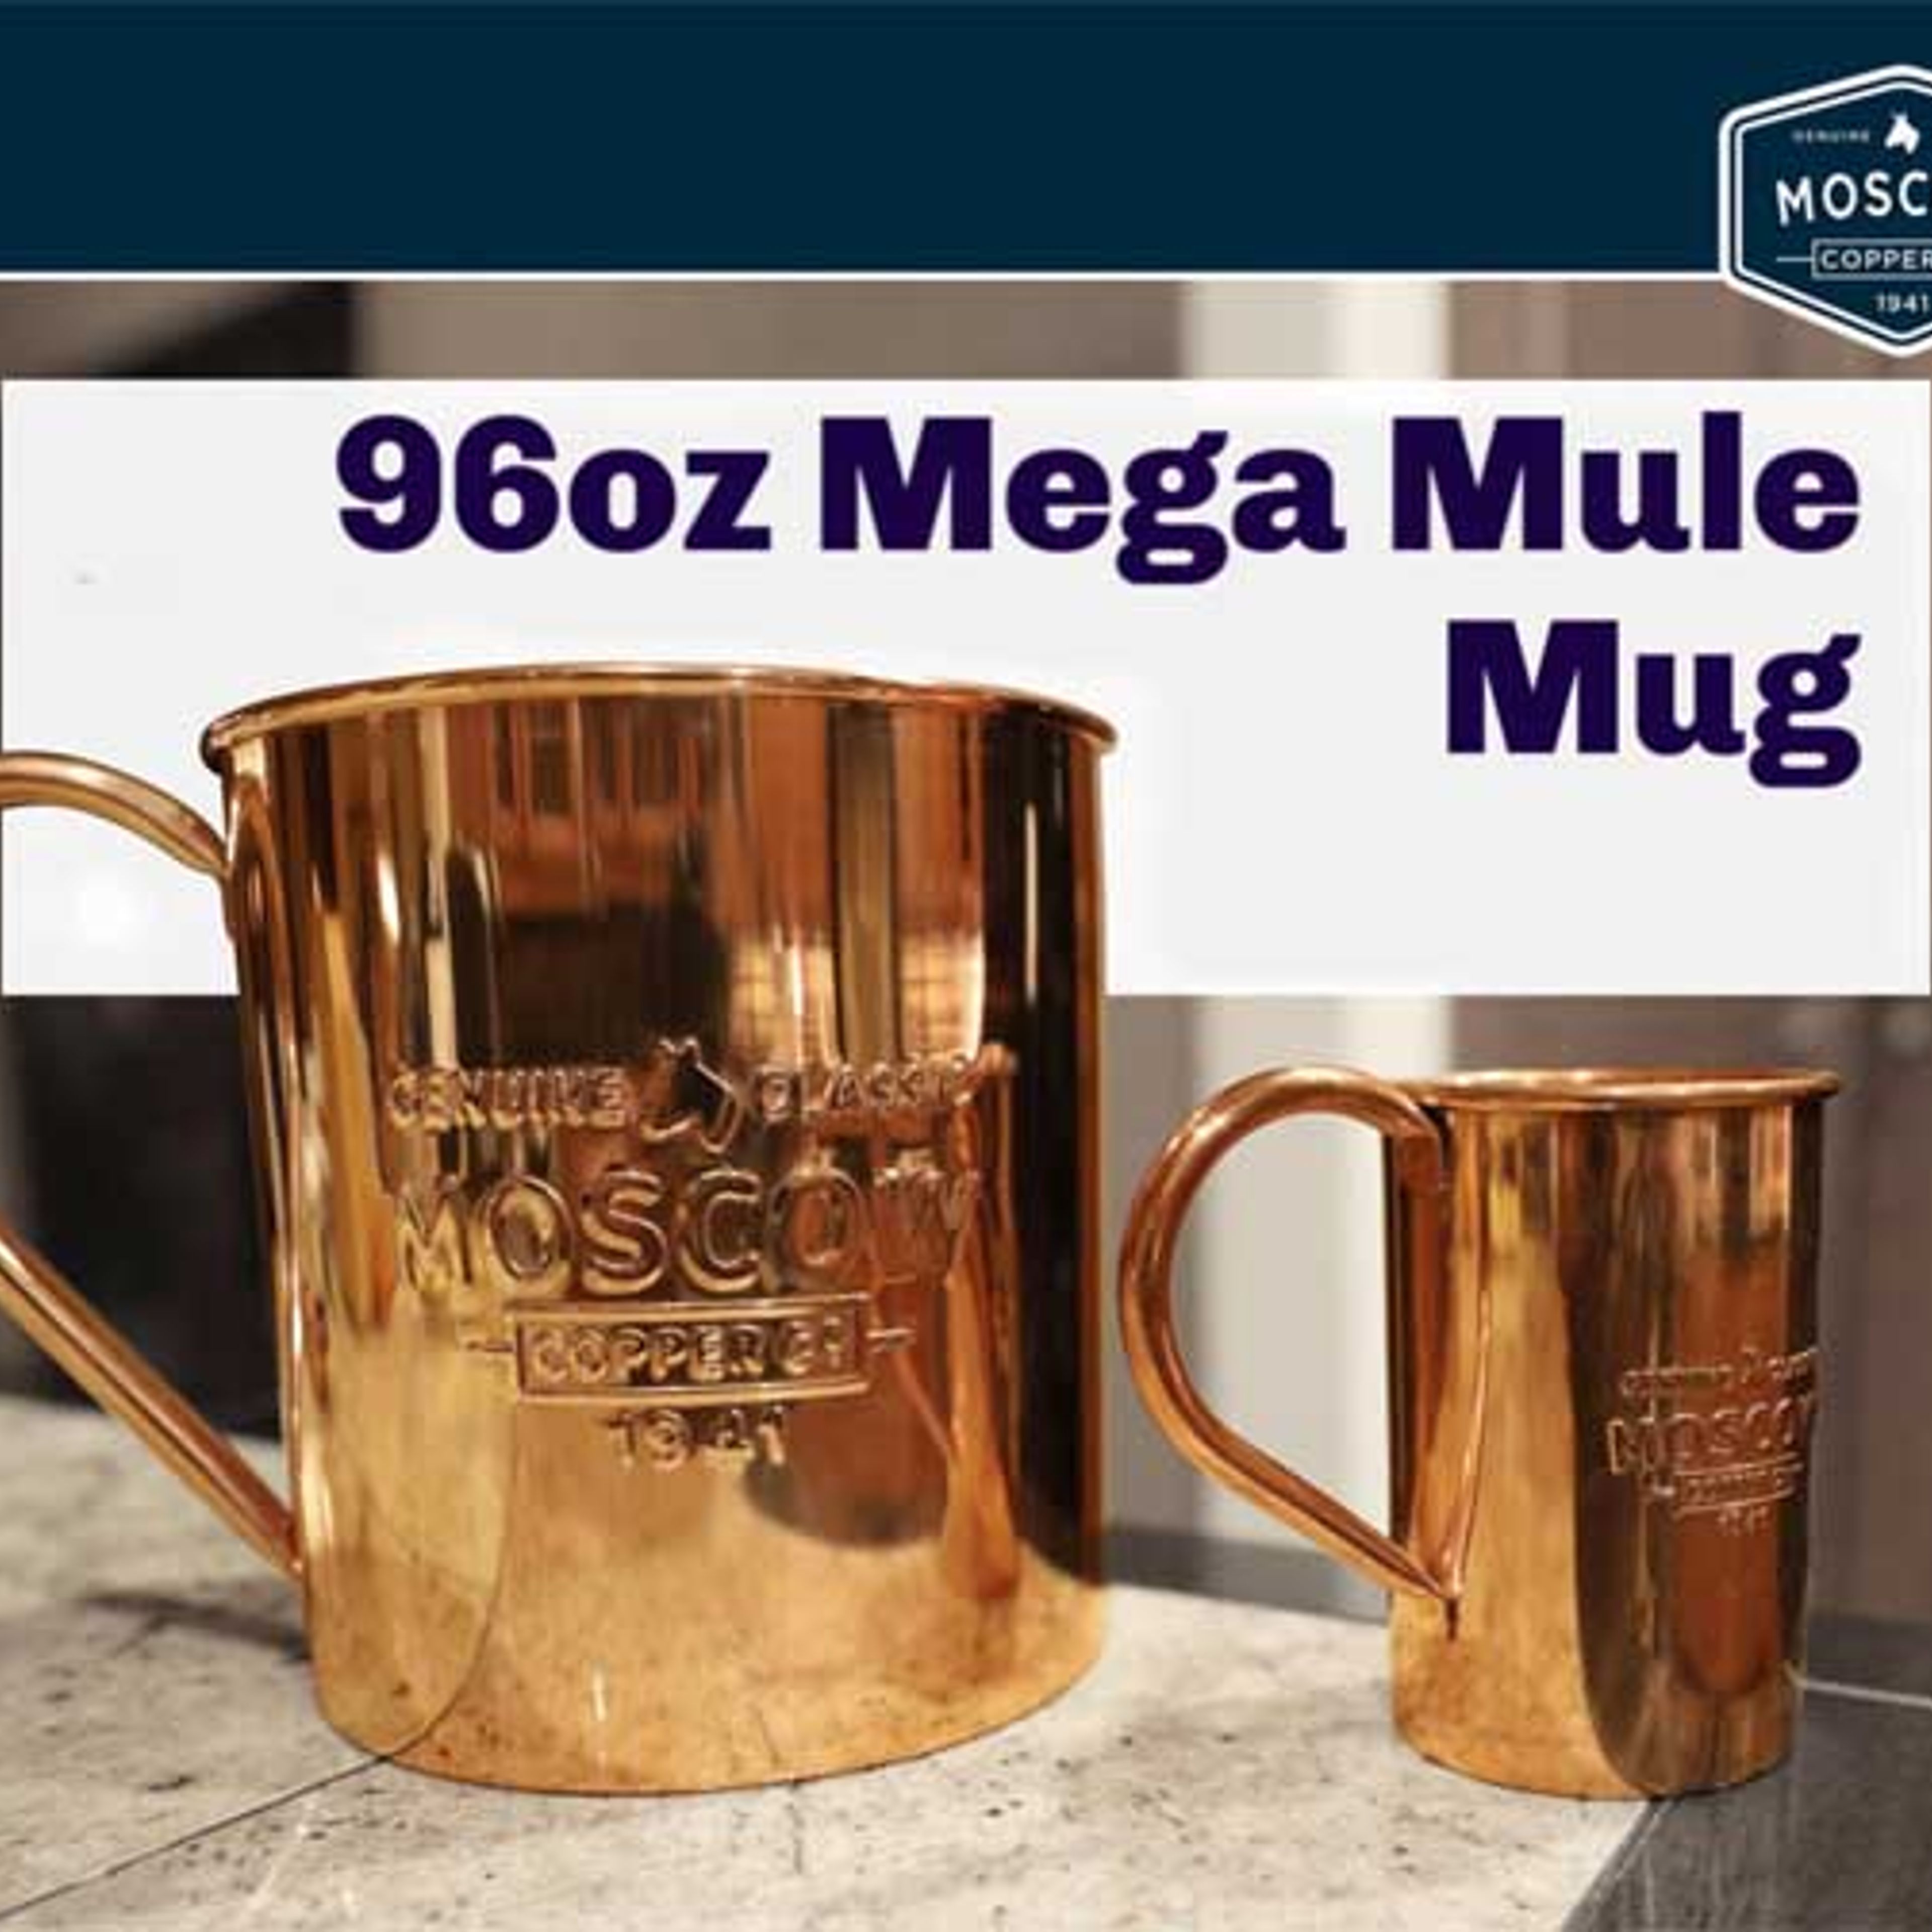 Mega Mule Mug - 96oz Party Mug